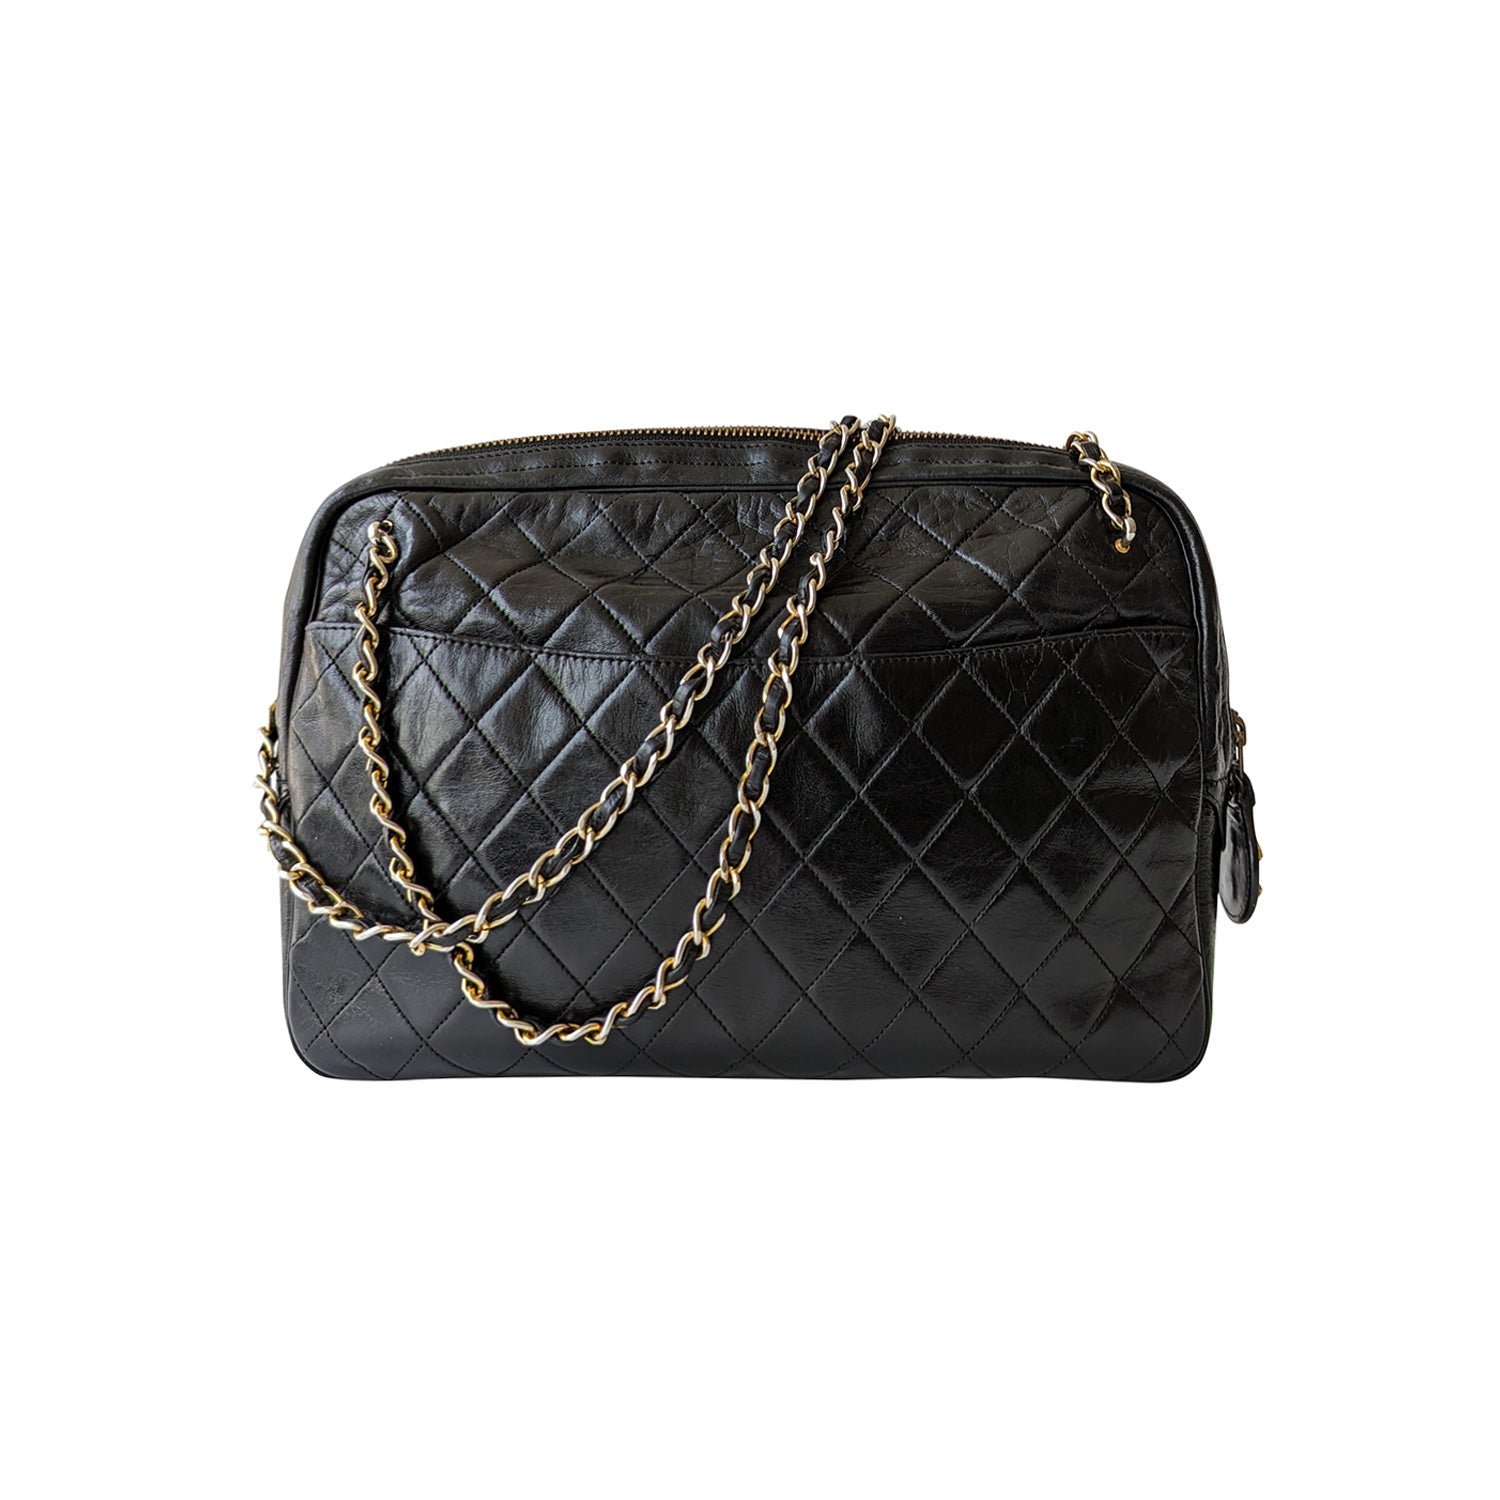 Shop authentic Louis Vuitton Epi Leather Pocket Organizer at revogue for  just USD 600.00